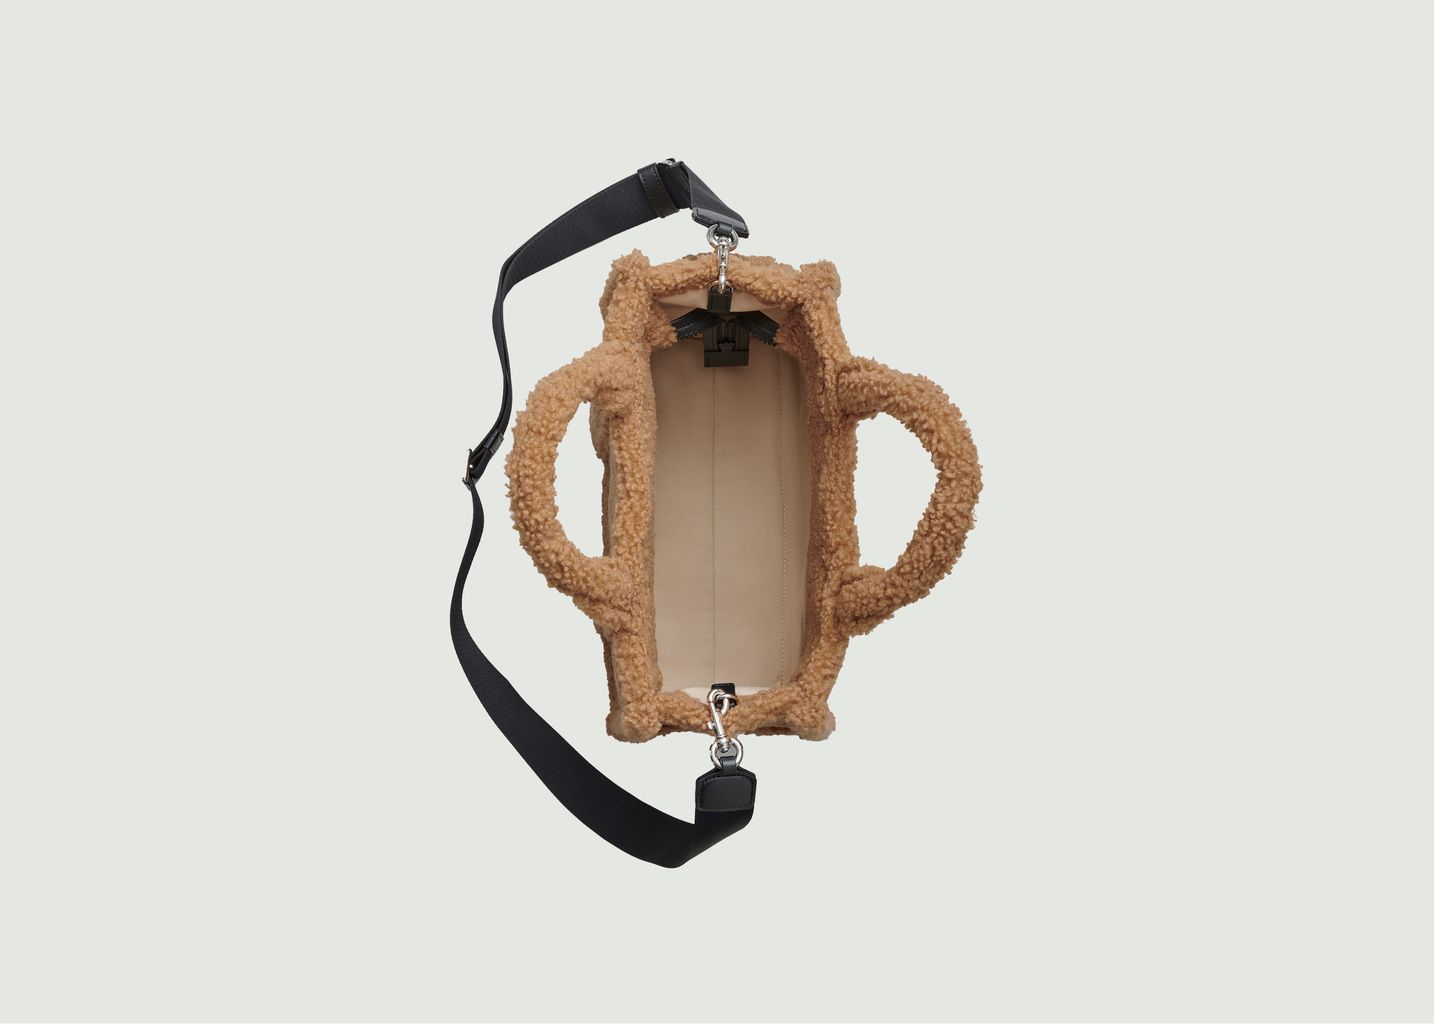 The Teddy Medium fur-effect tote bag - Marc Jacobs